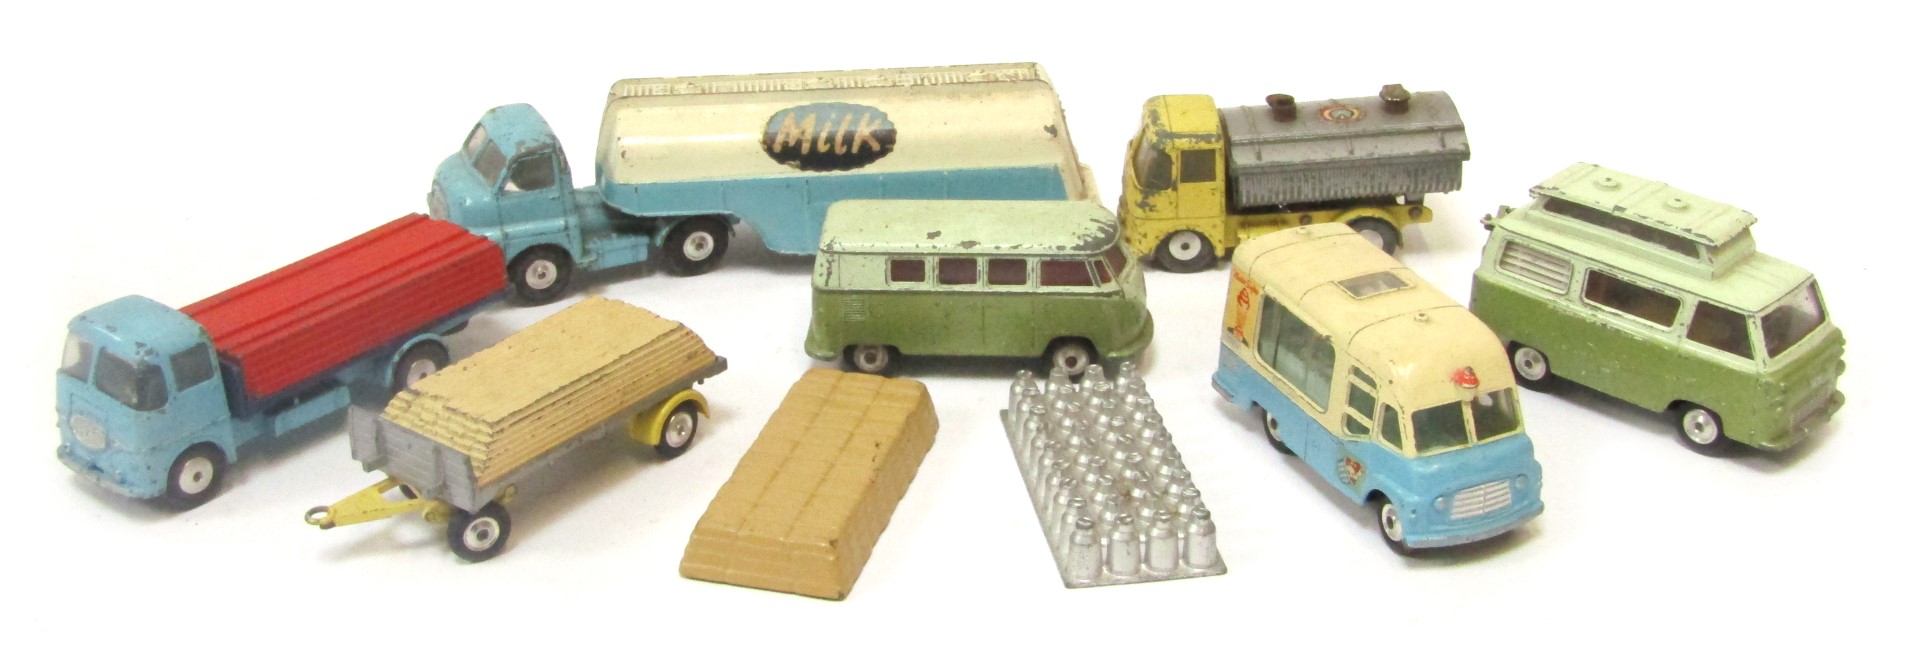 Diecast vehicles, playworn, comprising Corgi Ford James caravan, Smith's carrier van, Corgi Major bi